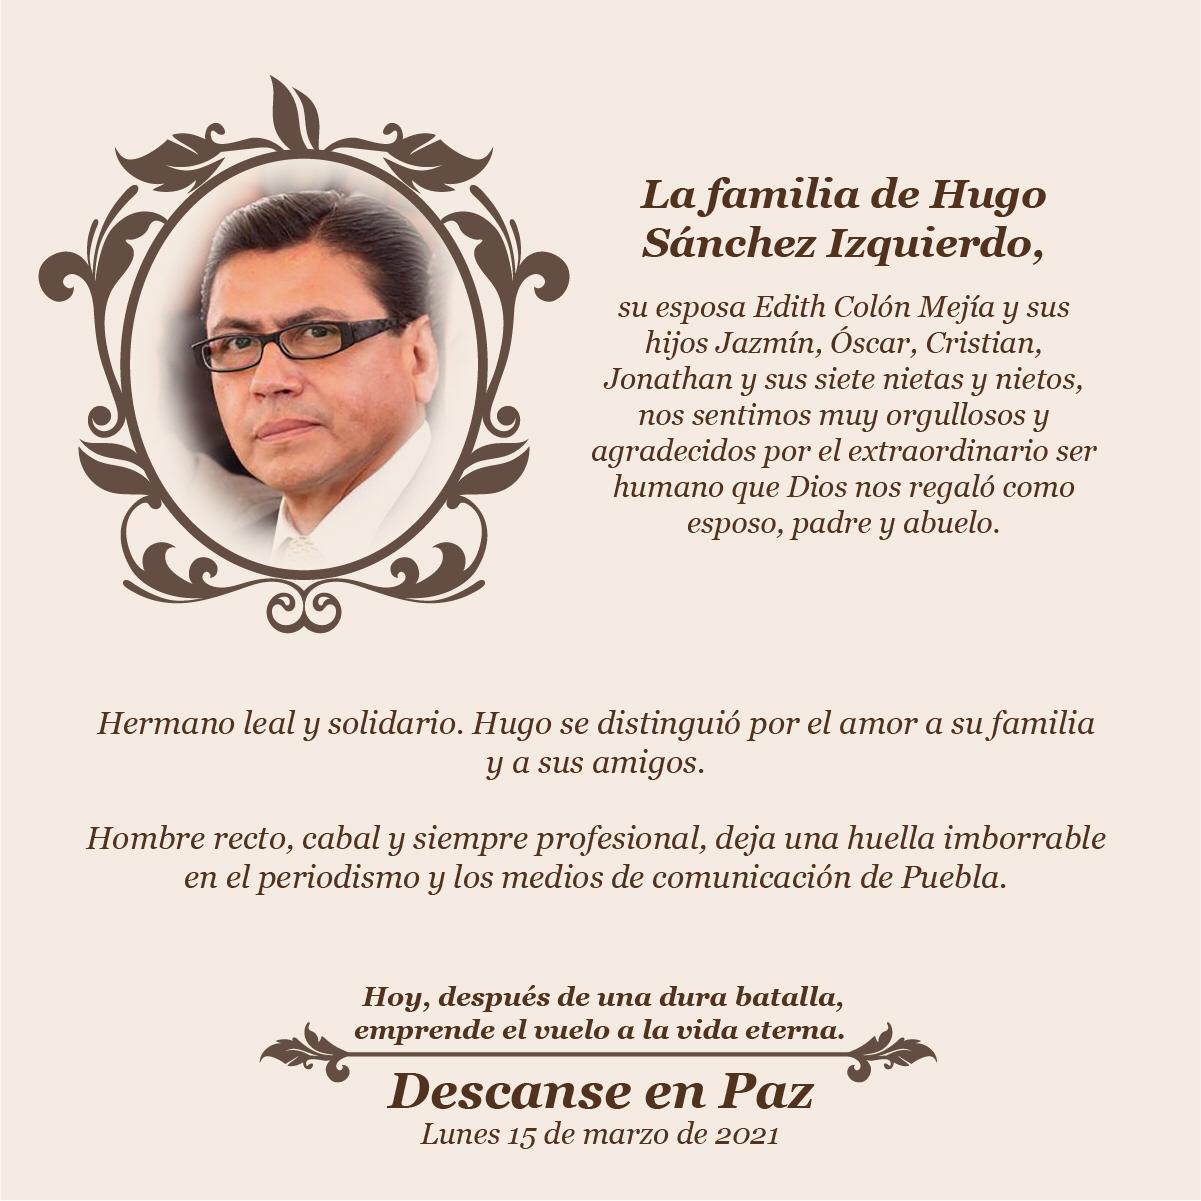 Hugo Sanchez Izquierdo.jpg